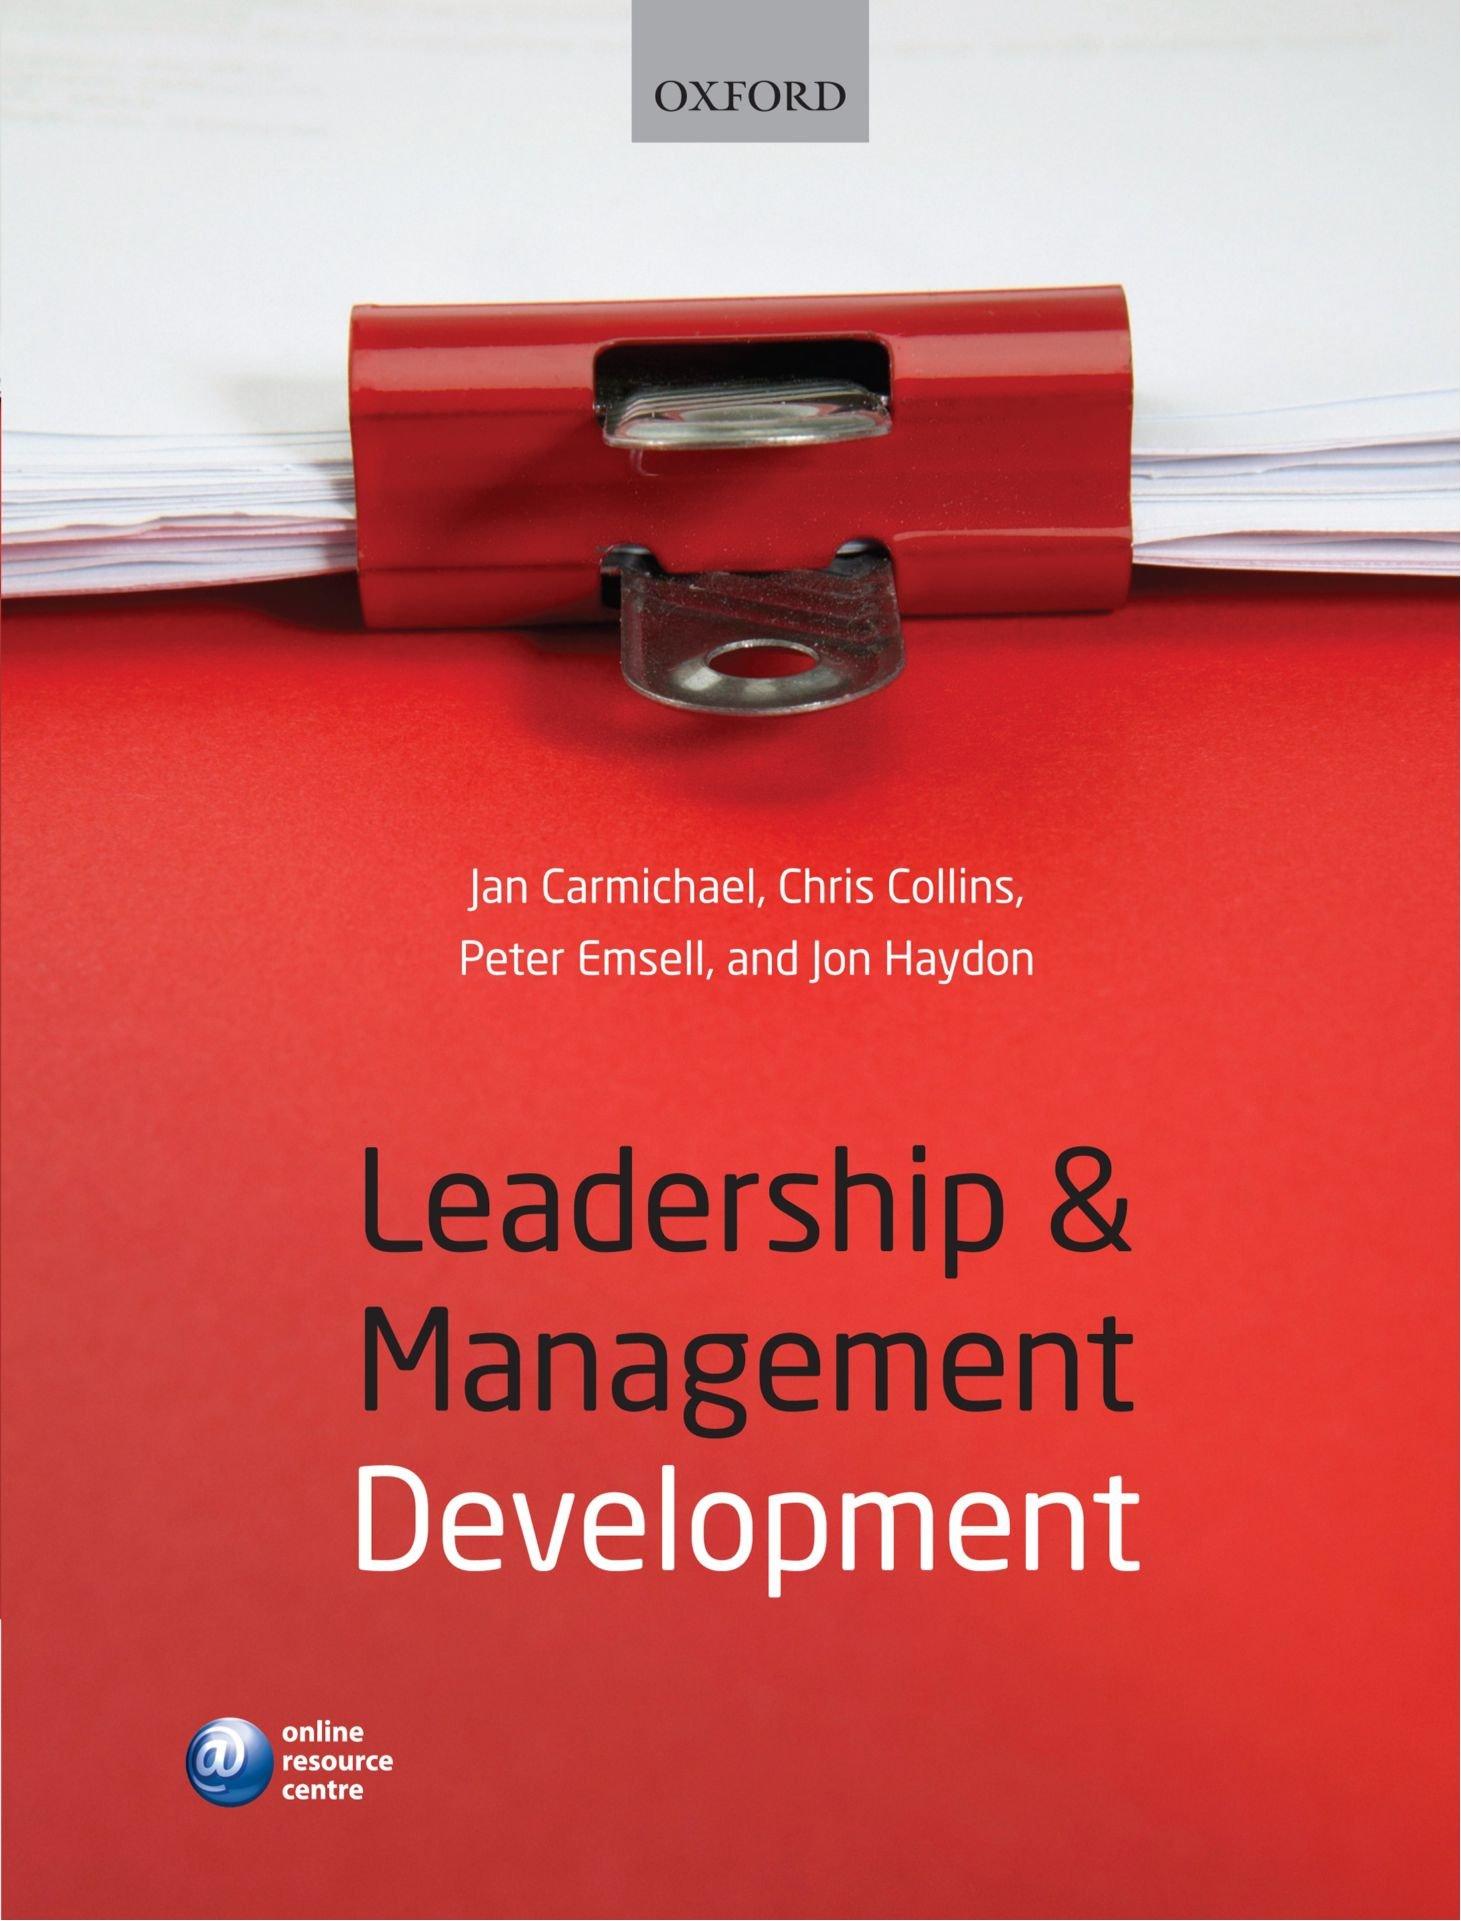 leadership and management development 1st edition jan l. carmichael, chris collins, peter emsell, jon haydon